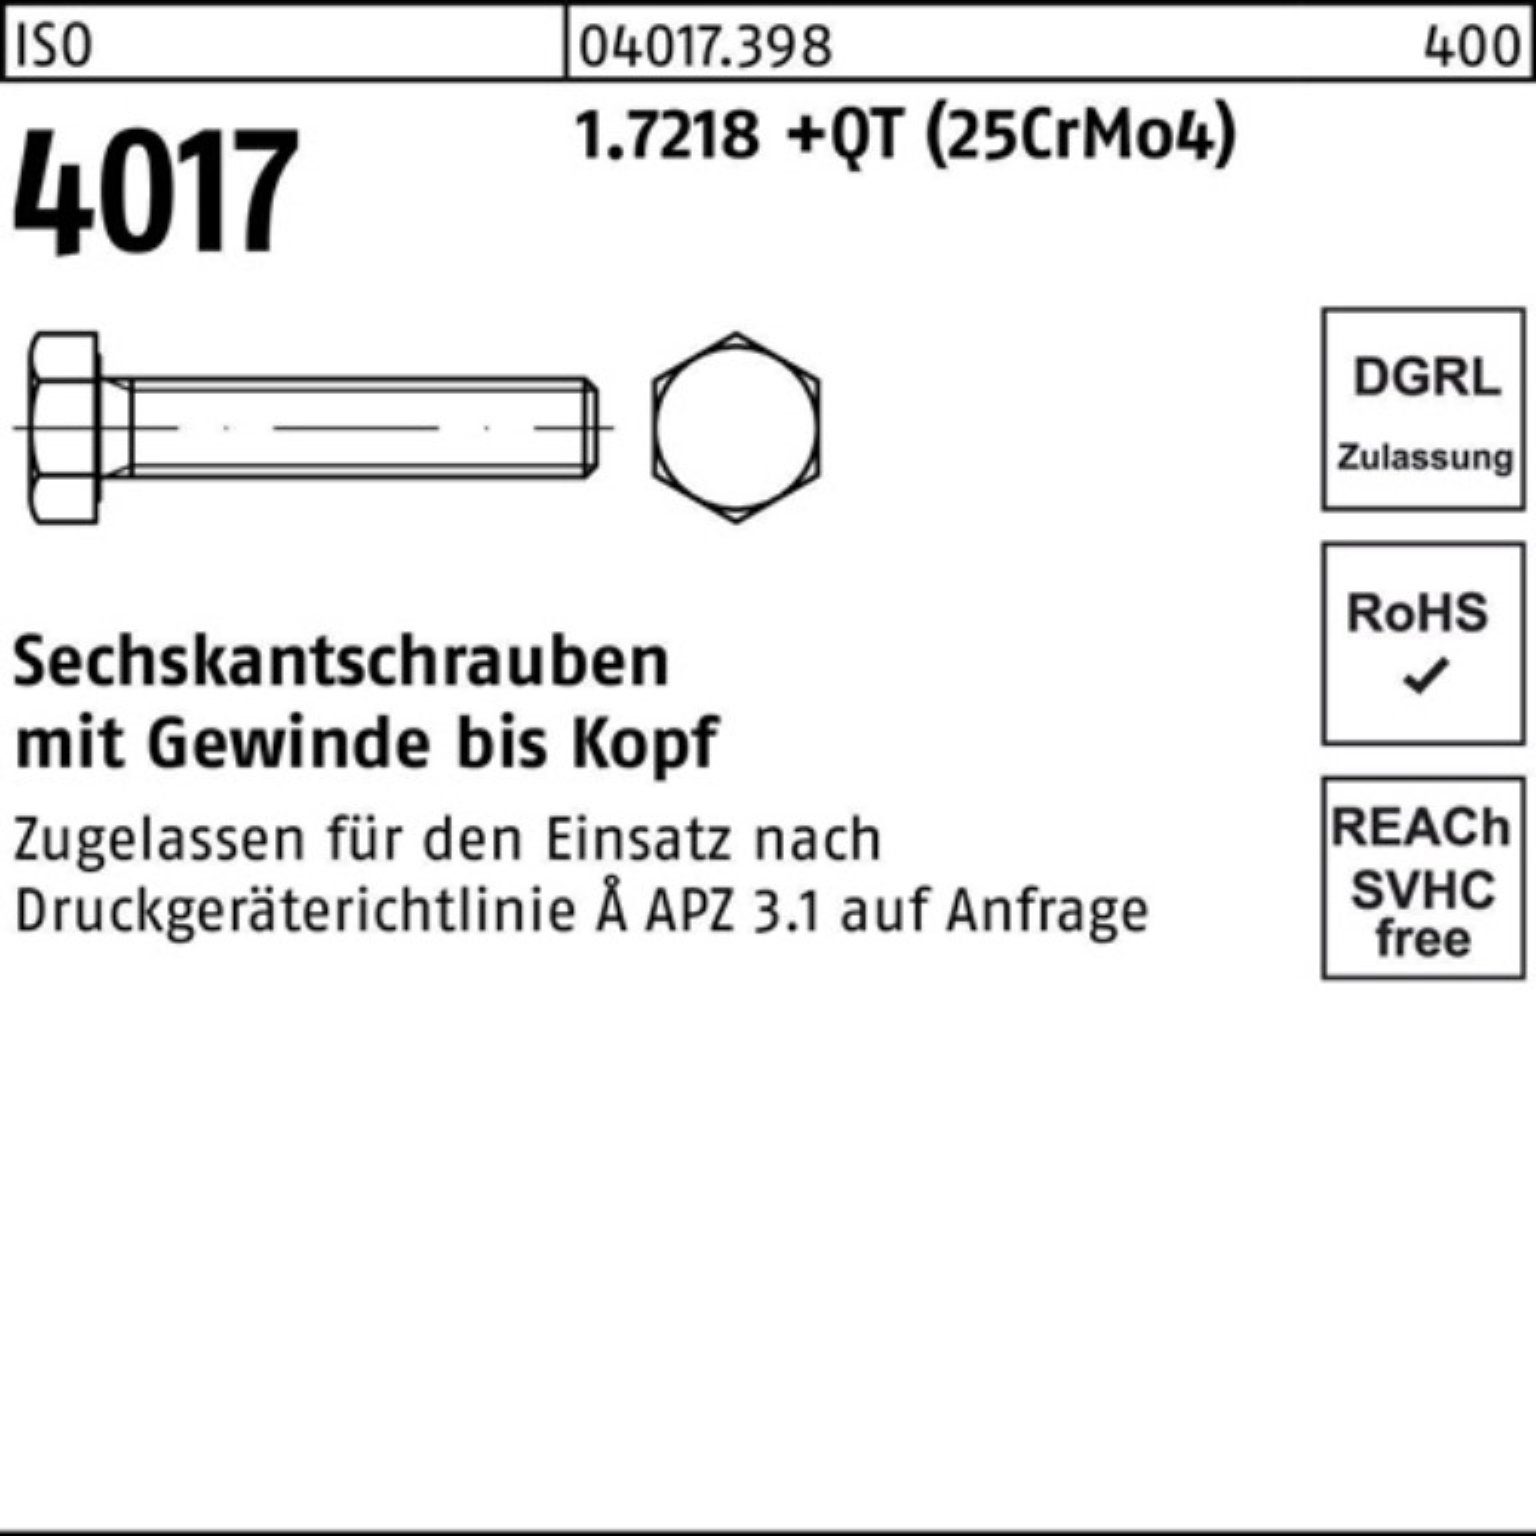 +QT Bufab 110 VG M36x (25CrMo4) 4017 Sechskantschraube 1.7218 Pack ISO Sechskantschraube 100er